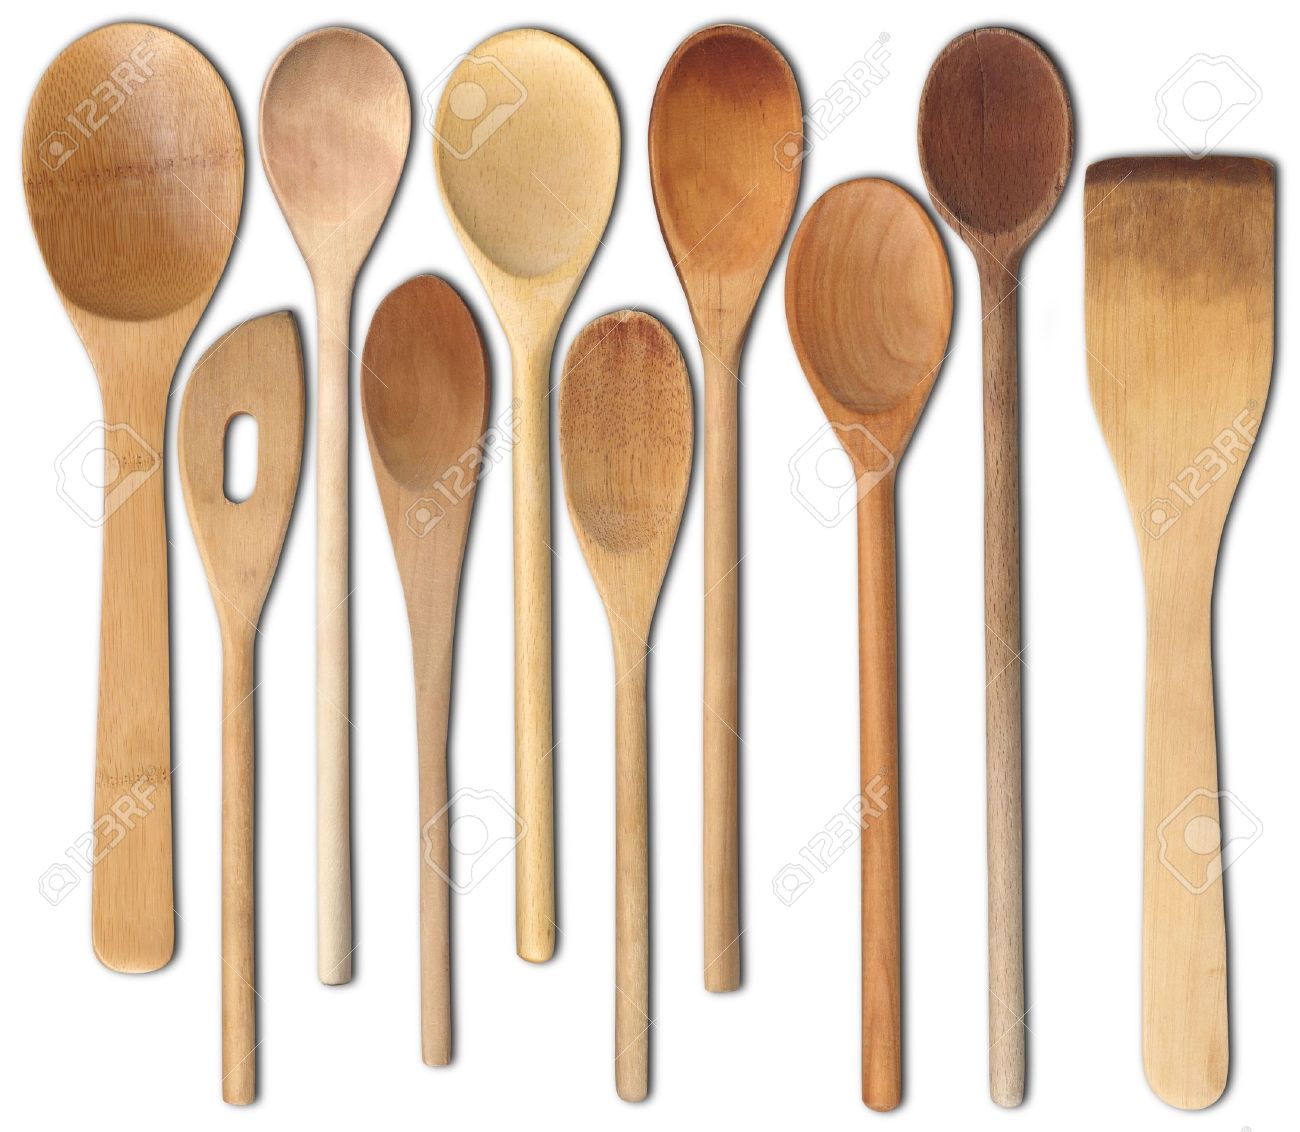 248975-Assortment-of-wooden-spoons--Stock-Photo-spoon.jpg